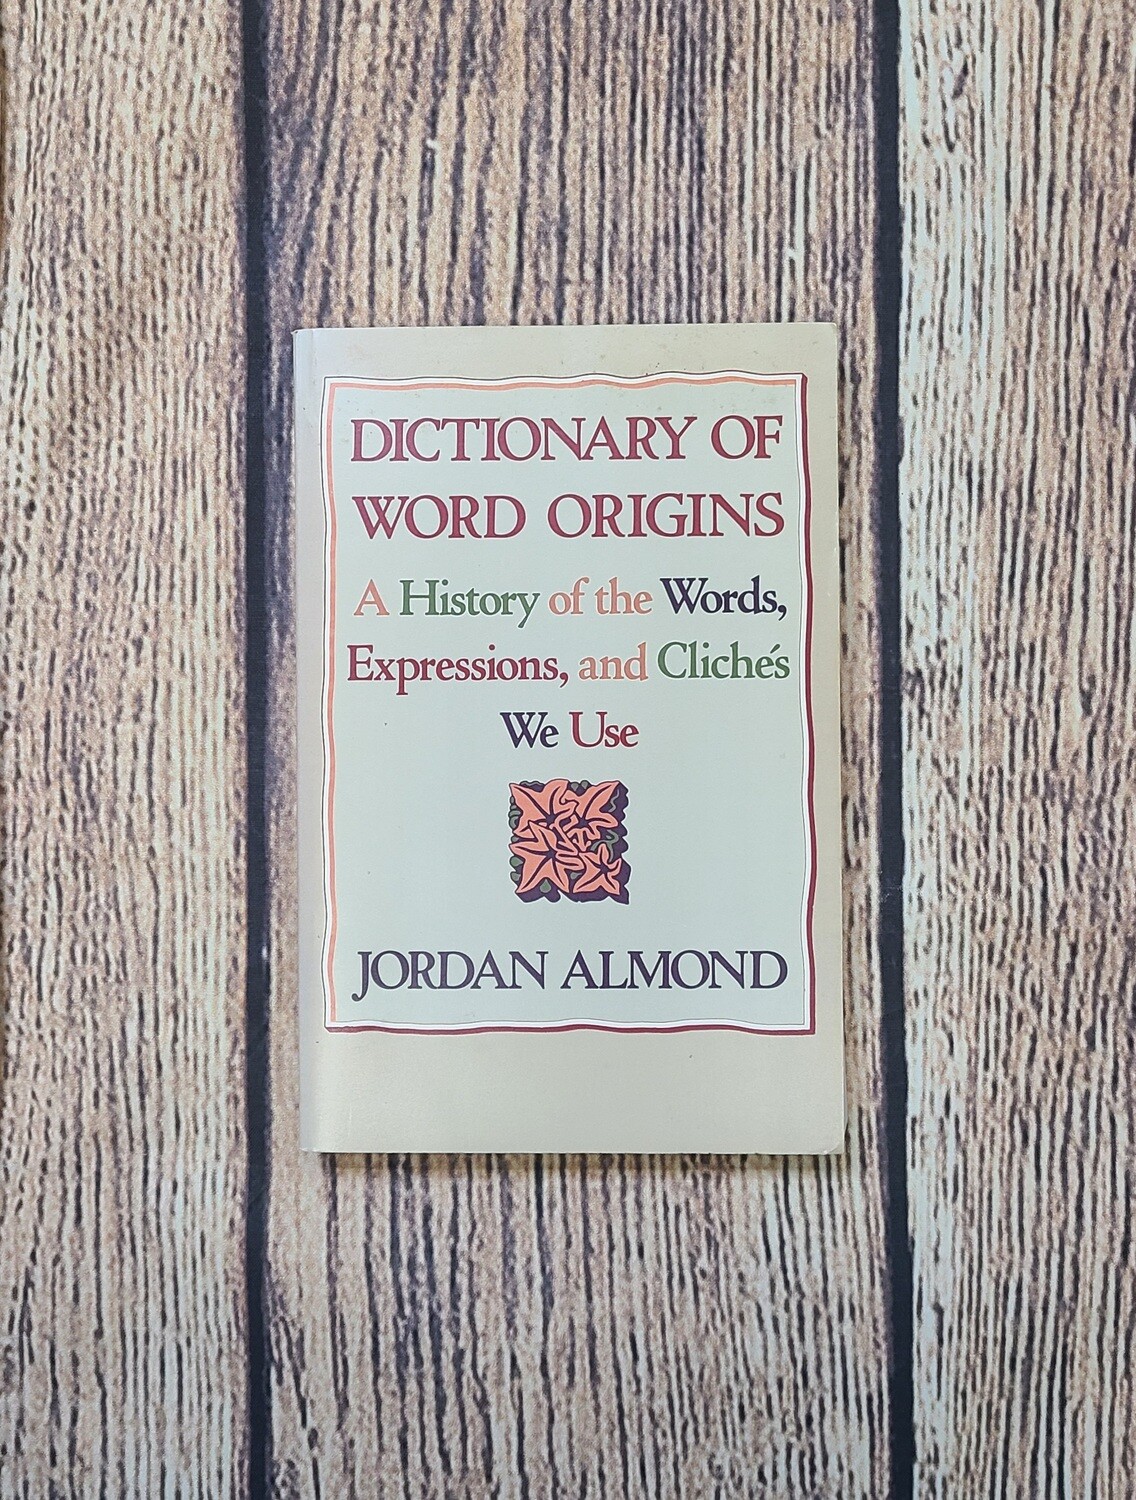 Dictionary of Word Origins by Jordan Almond